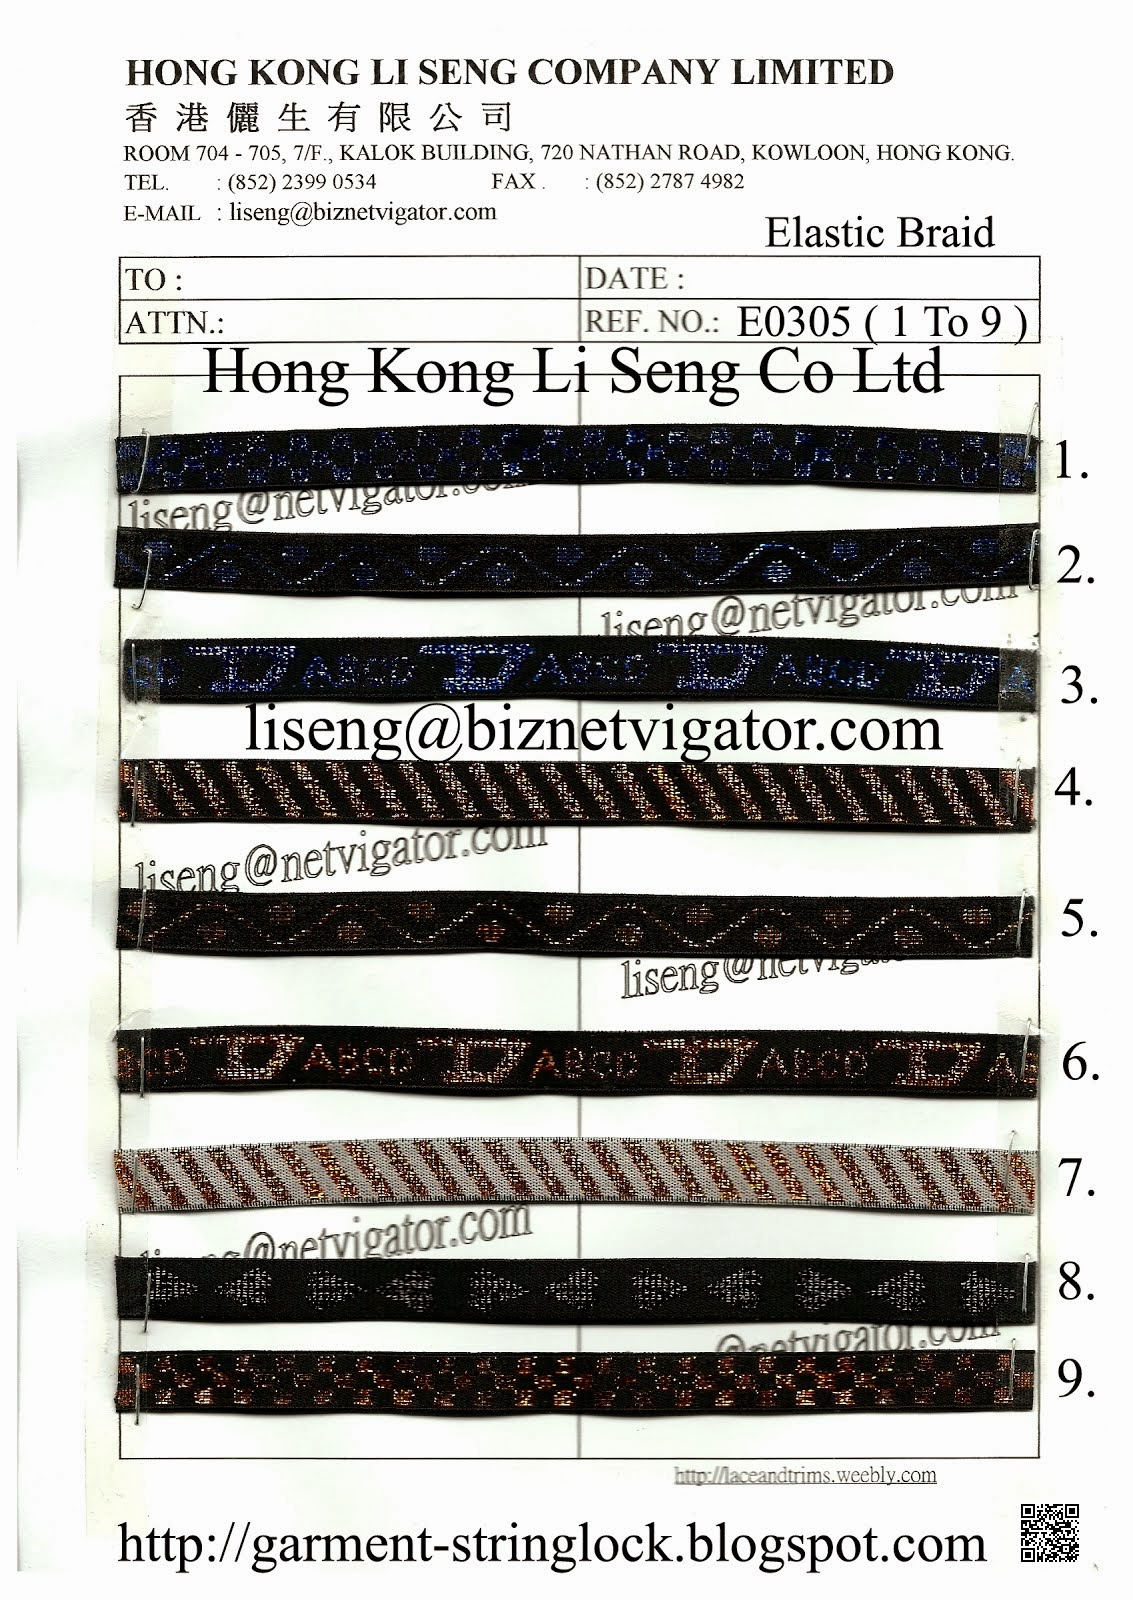 Elastic Braid Tape Manufacturer - Hong Kong Li Seng Co Ltd